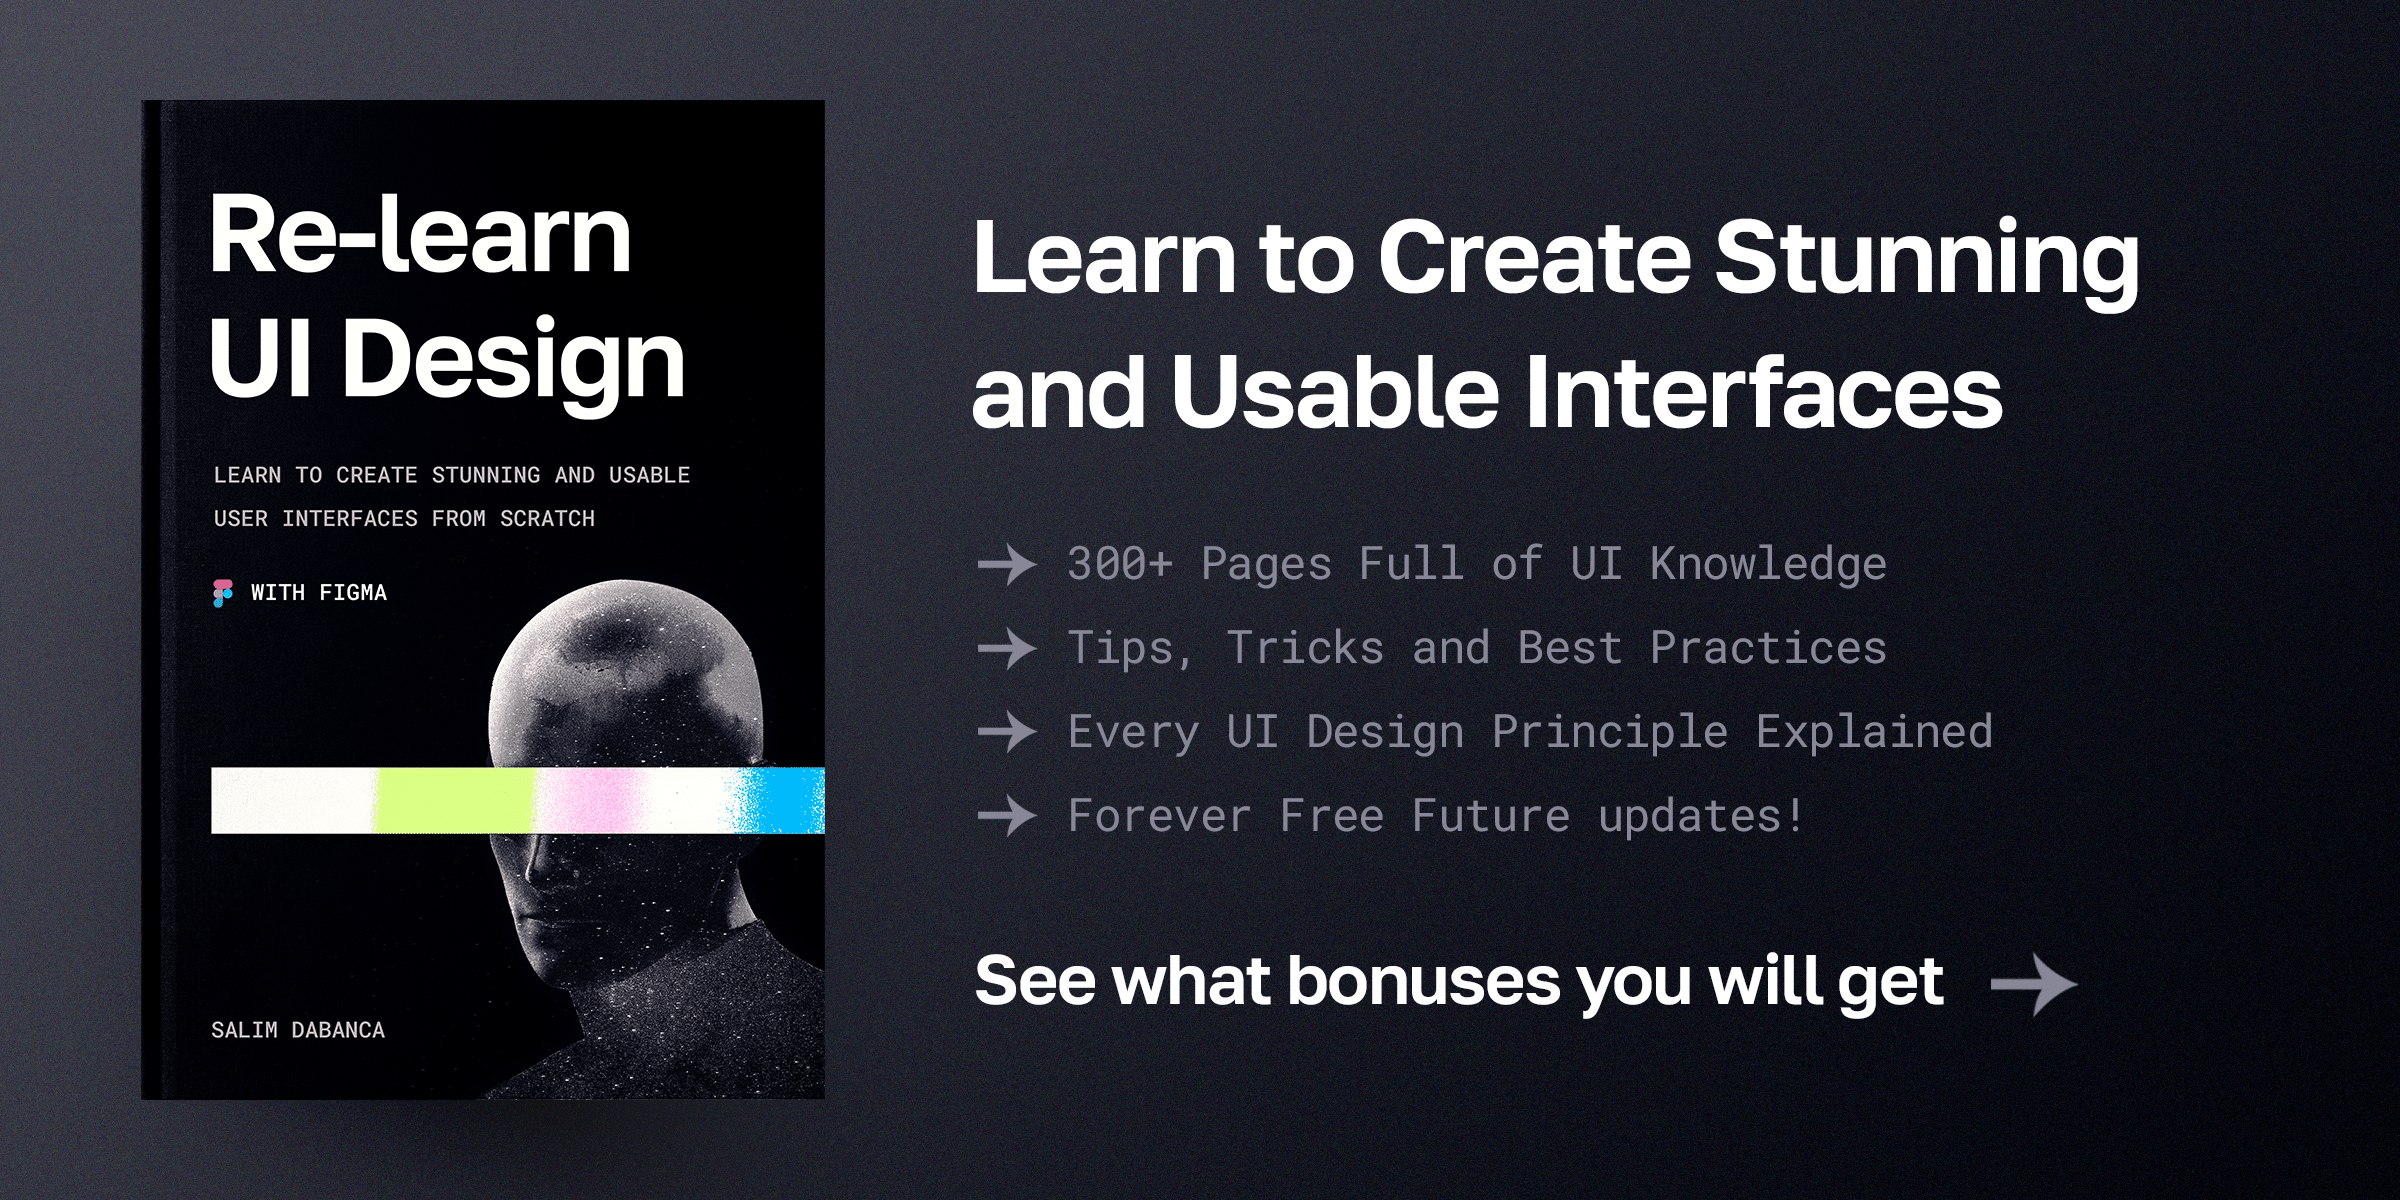 [VIP] UX.MARS: Re-learn UI Design eBook